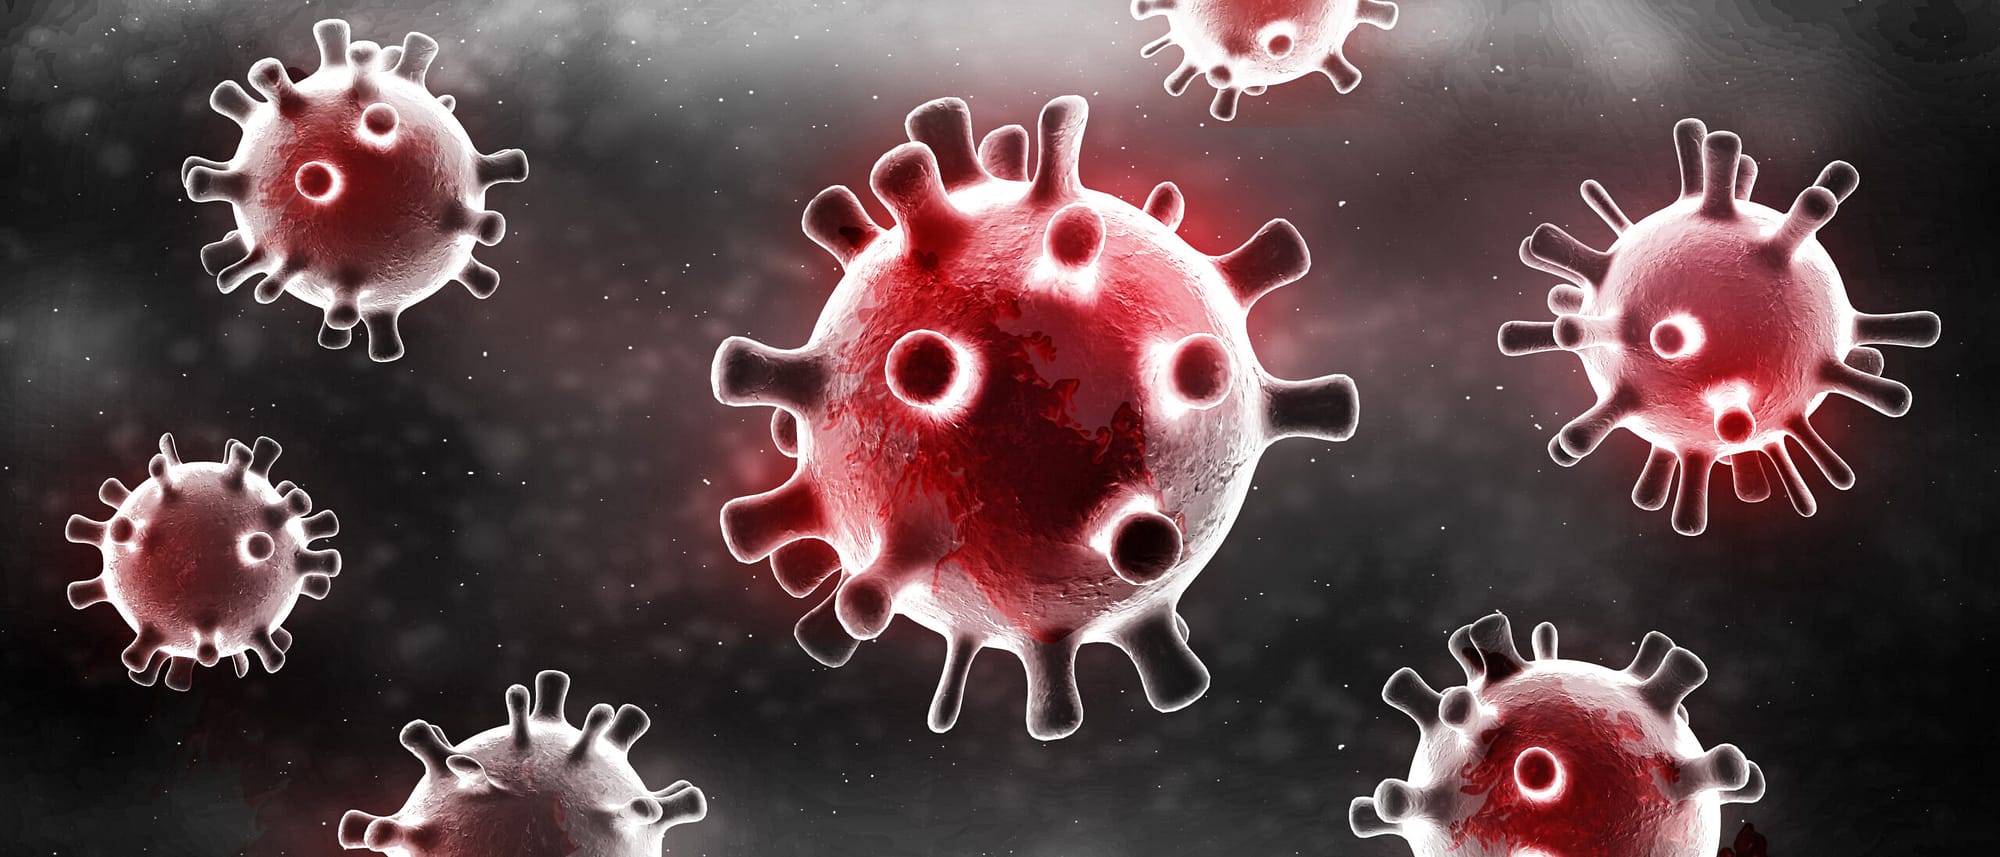 monkeypox virus cells 3d illustration